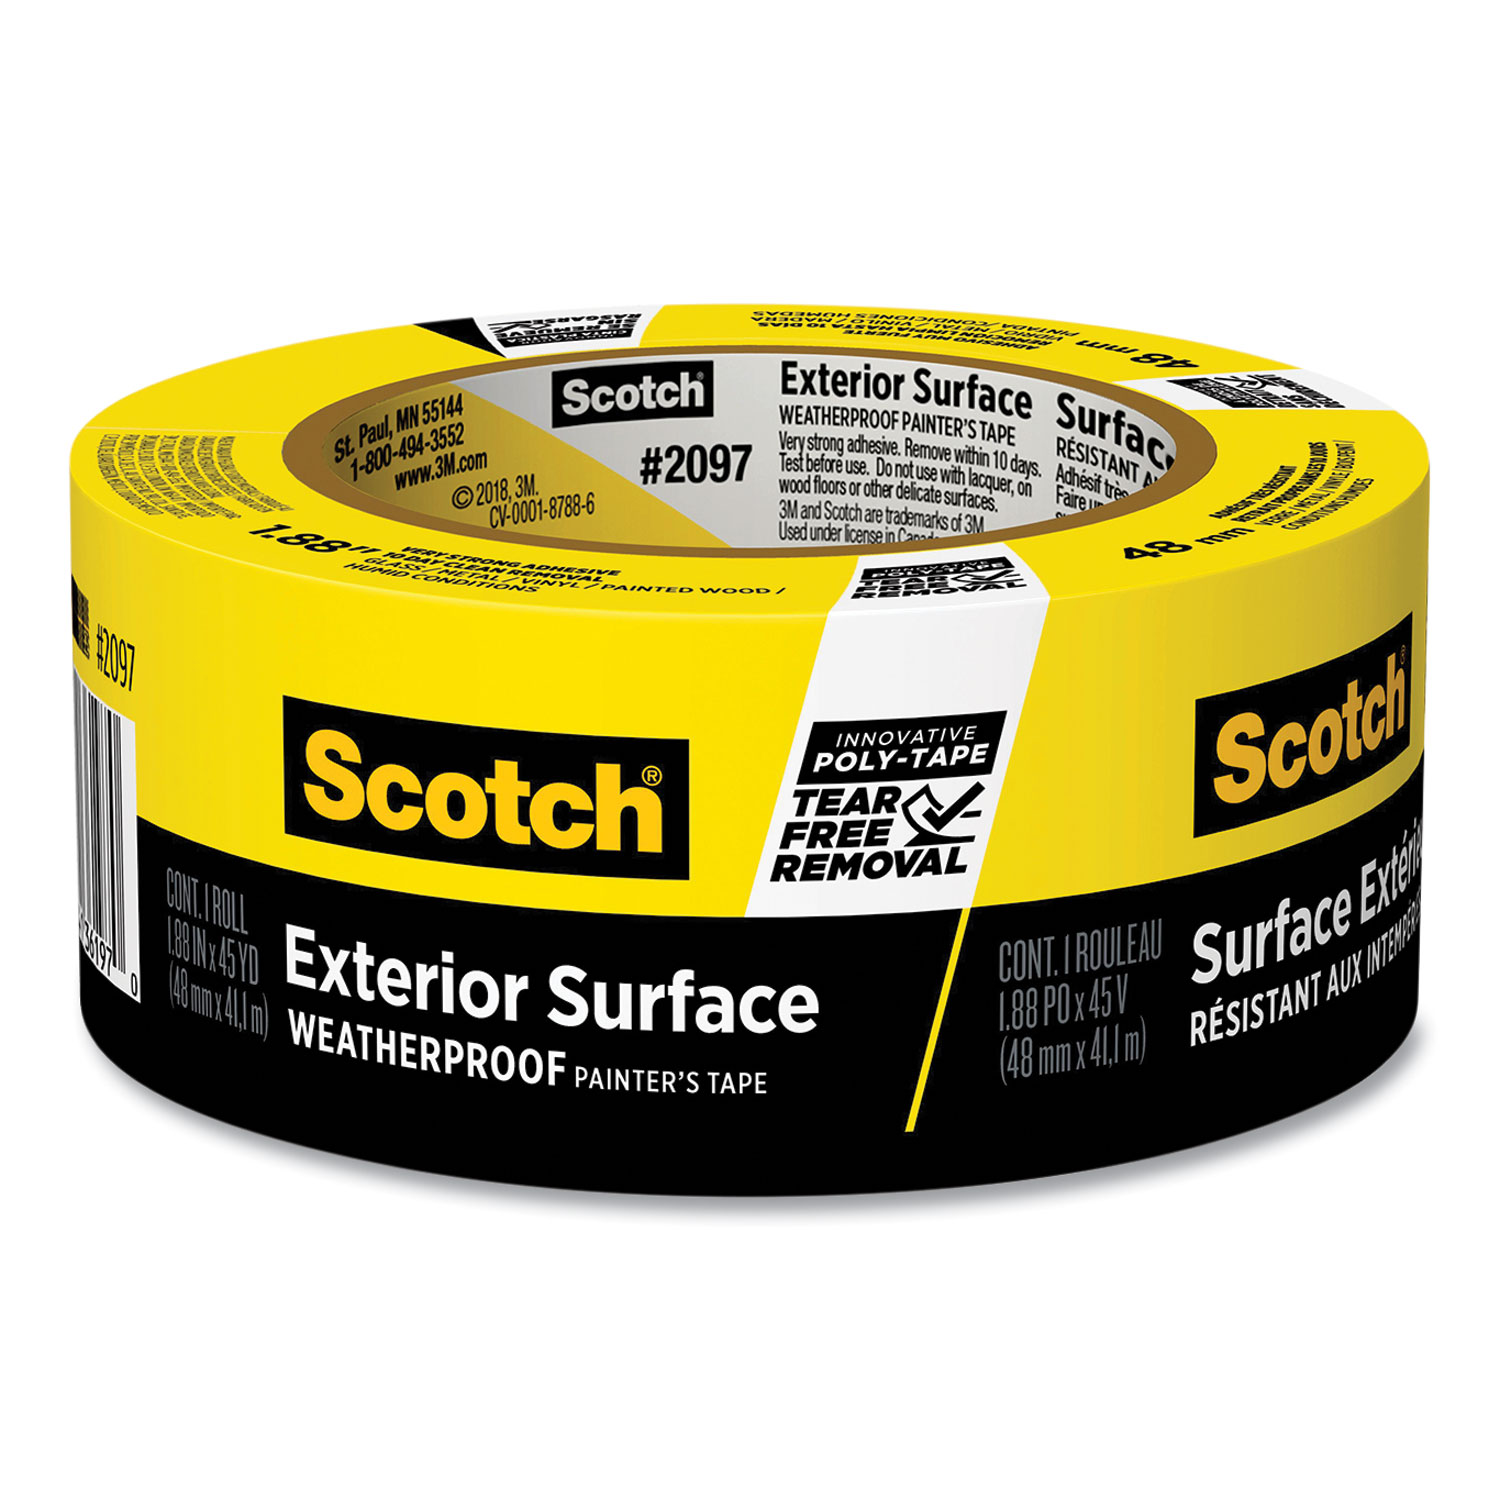 Scotch® Exterior Surface Weatherproof Painters Tape, 1.88 x 45 yds, Yellow